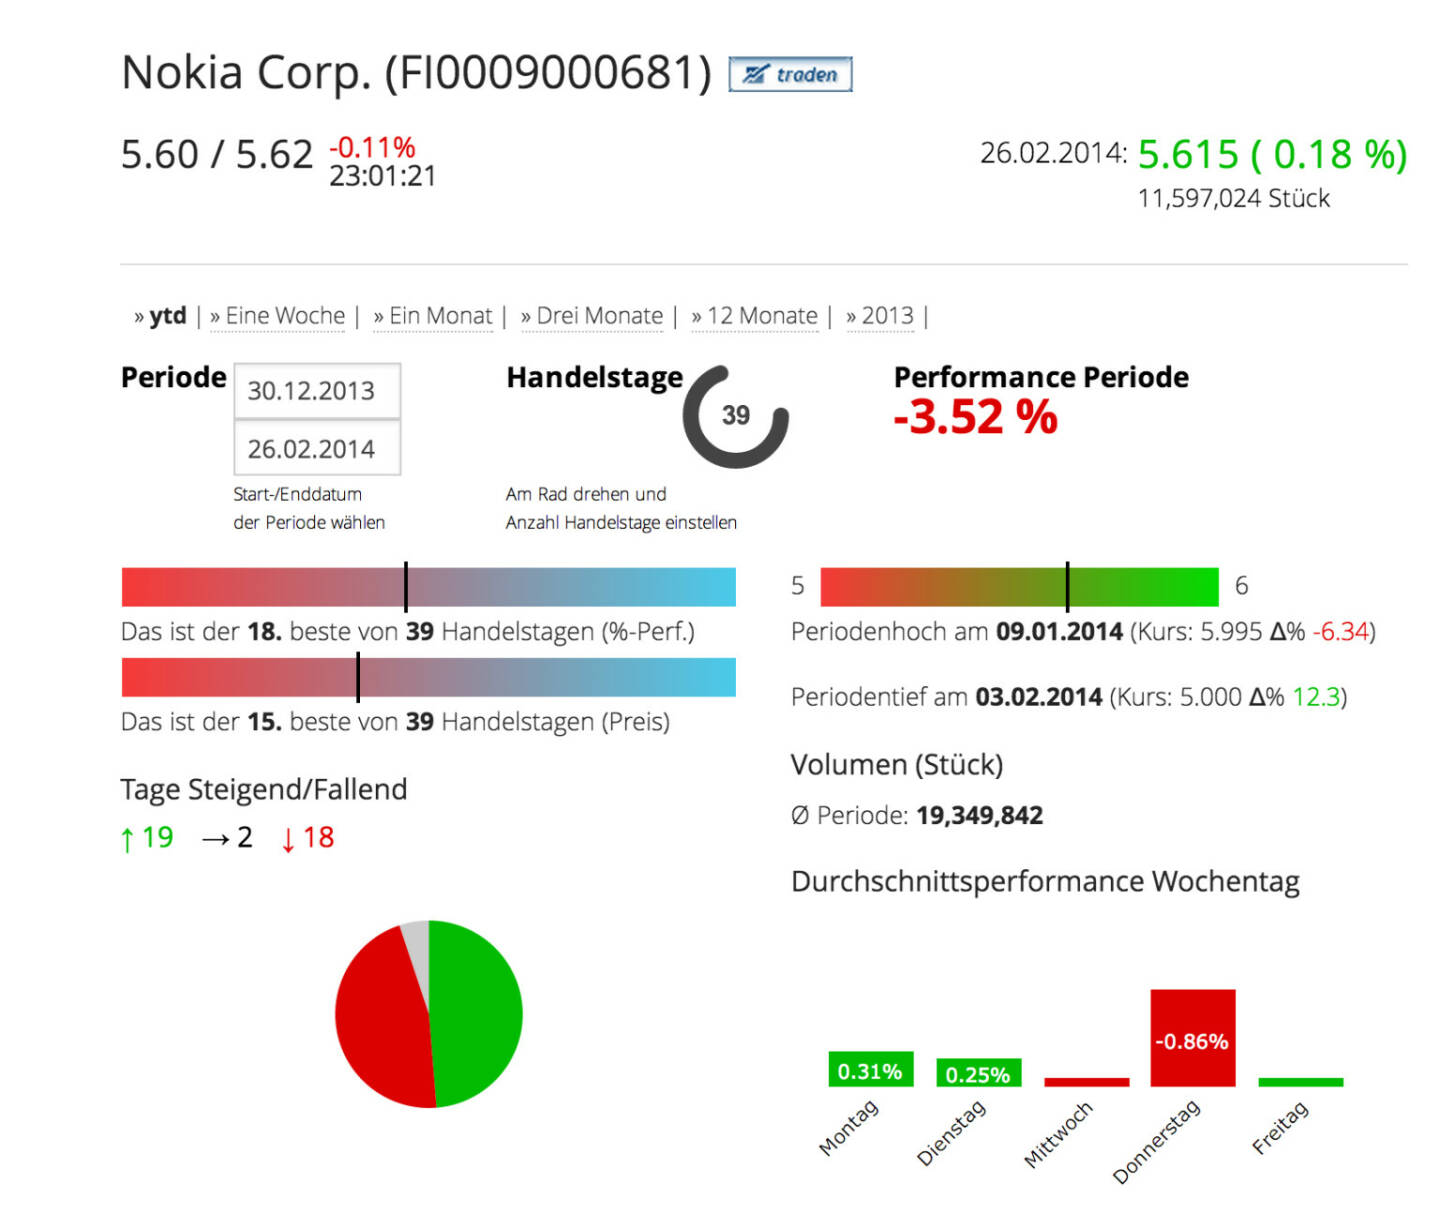 Die Nokia Corp. im Börse Social Network, http://boerse-social.com/launch/aktie/nokia_corp